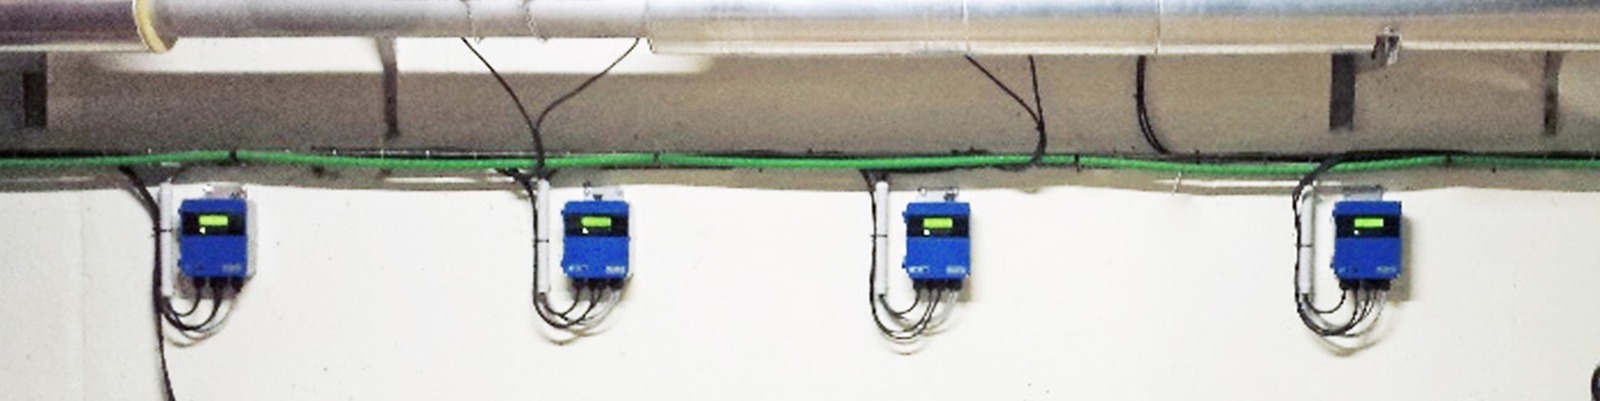 ultrasonic flowmeters for harsh environments